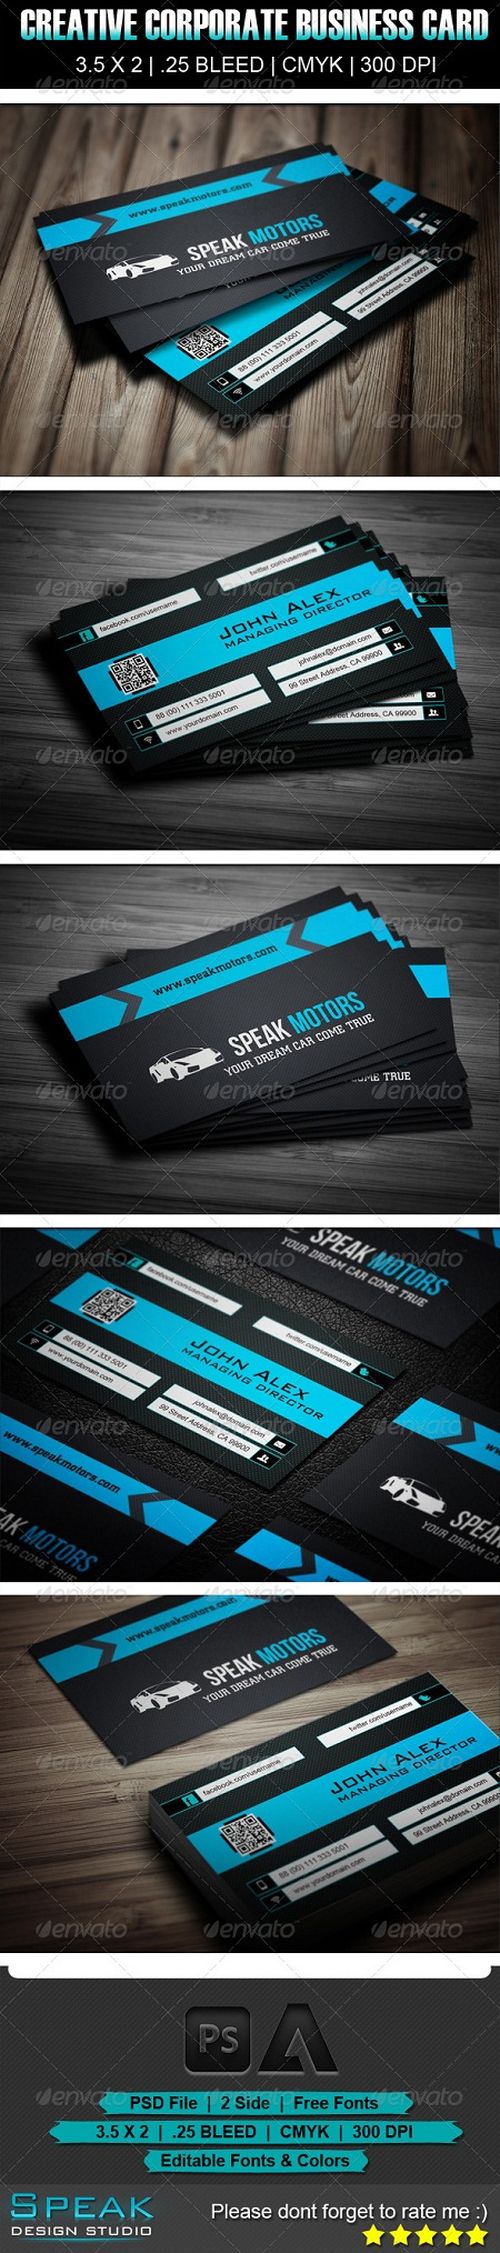 PSD - Speak Motors Creative Business Card Design